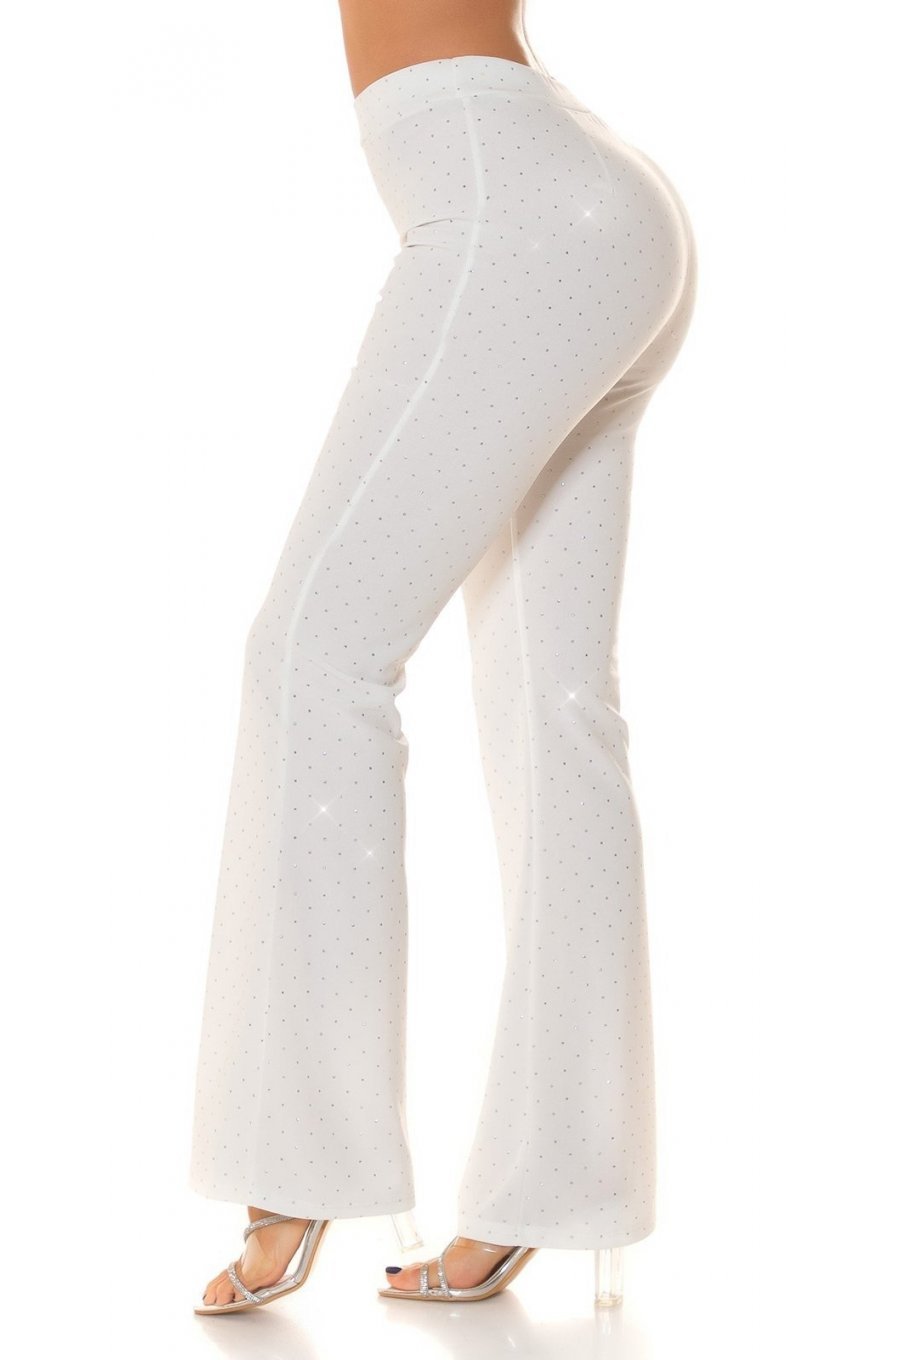 Pantaloni dama eleganti evazati, albi, cu glitter, Andie 2 - jojofashion.ro